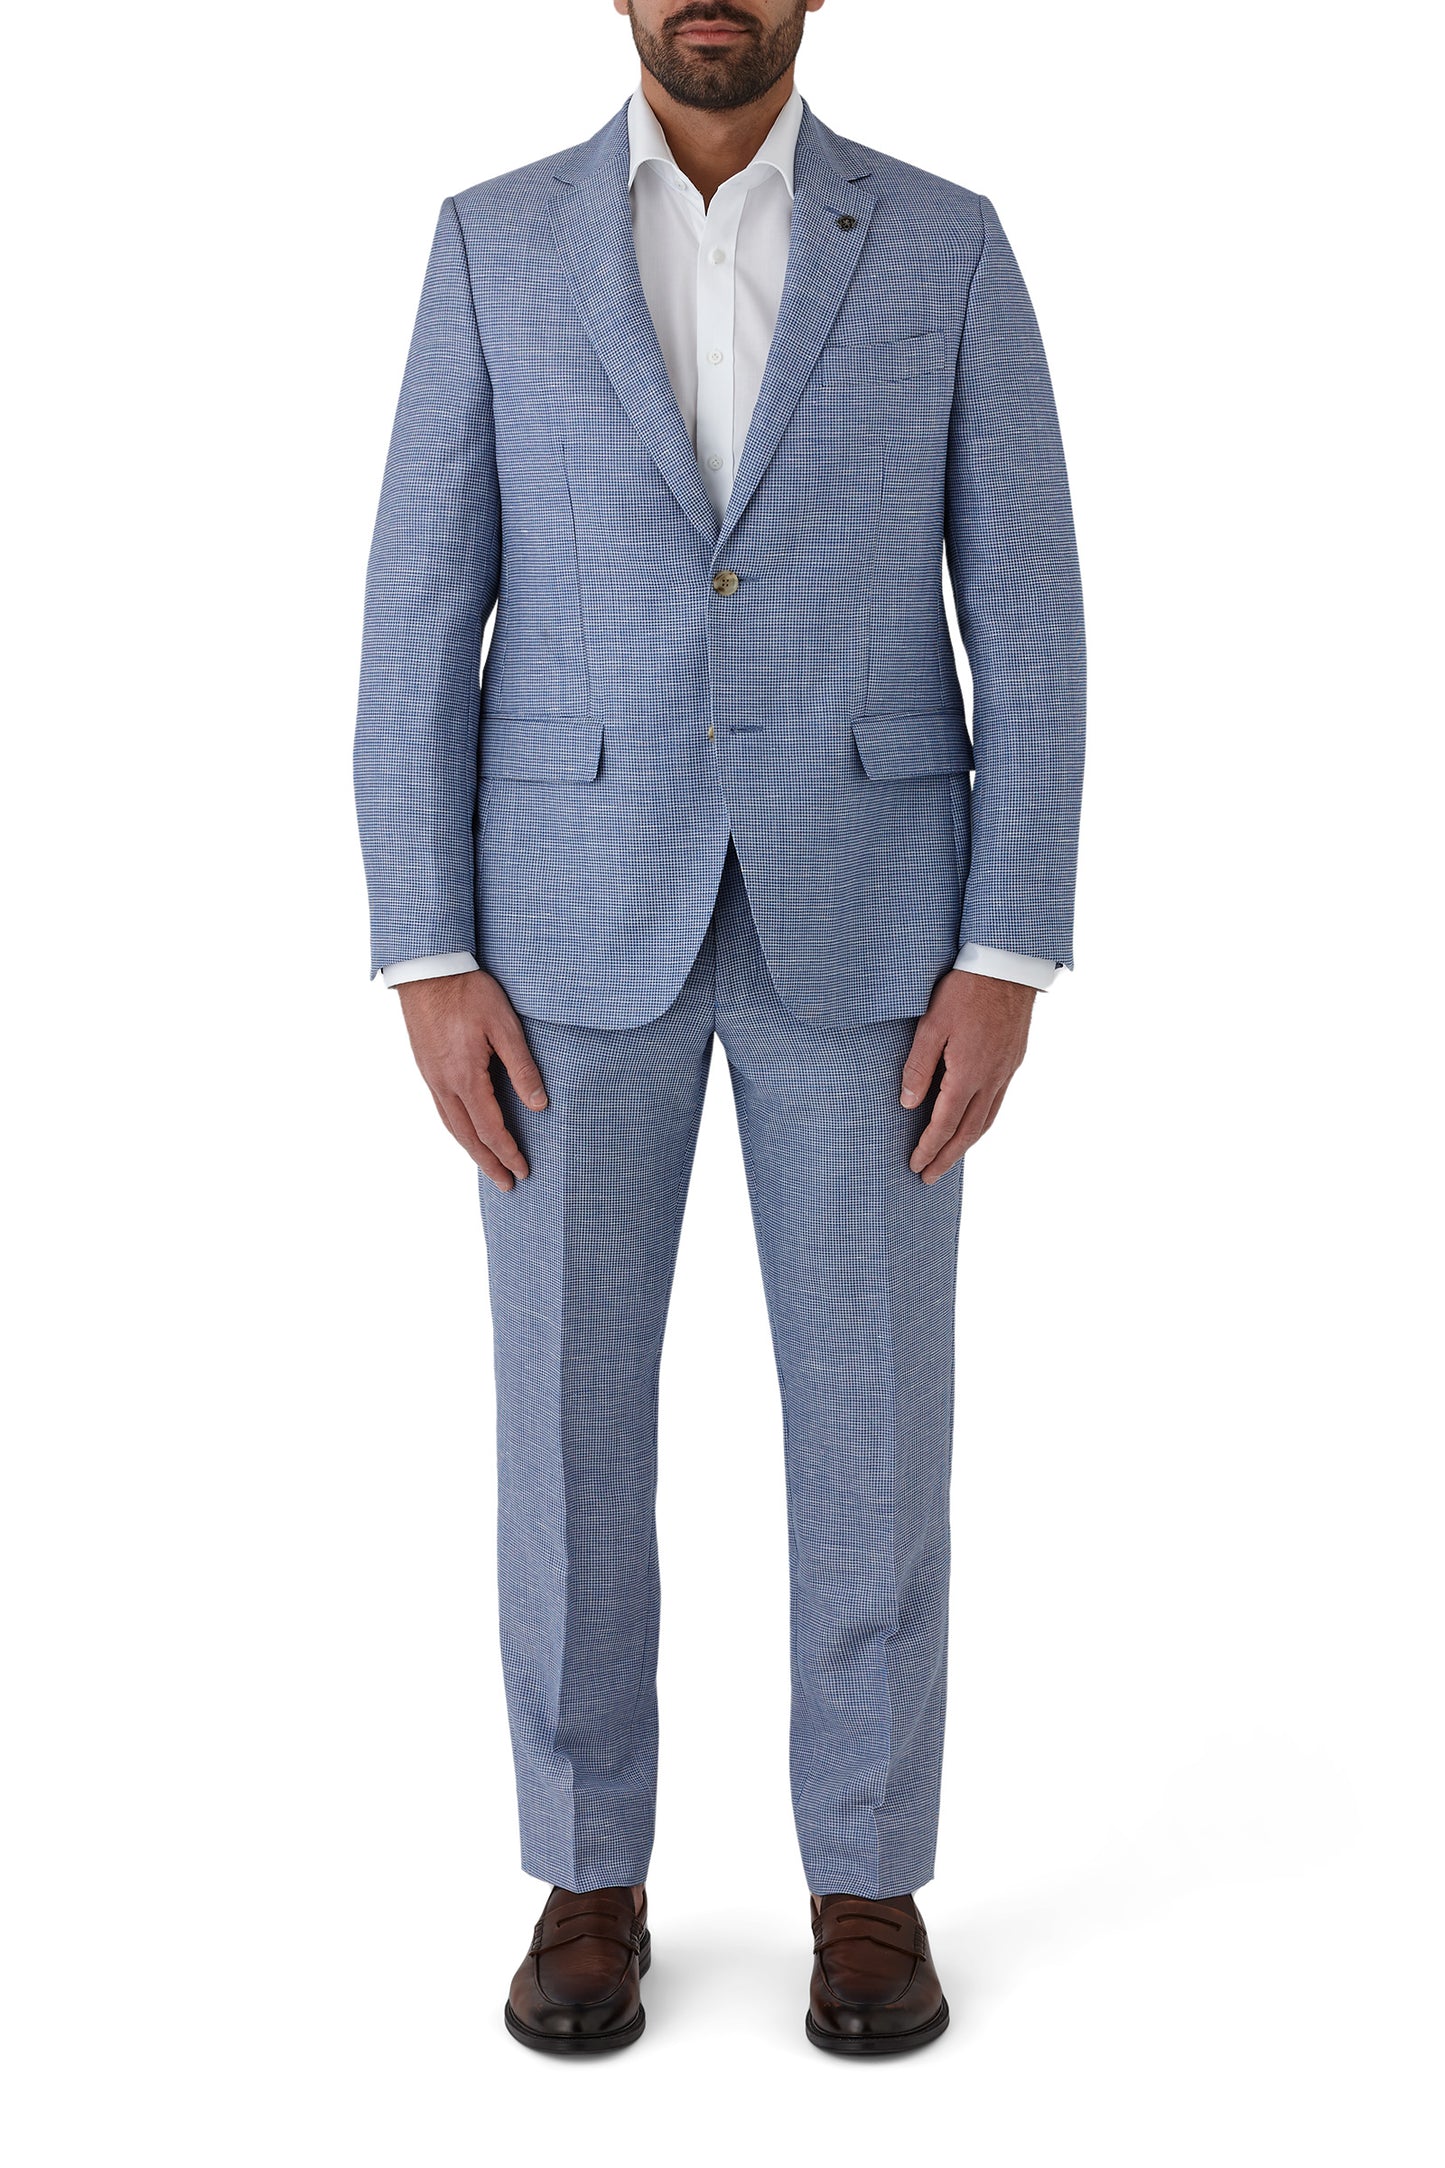 Cambridge - Morse/Interceptor Suit - Blue Linen